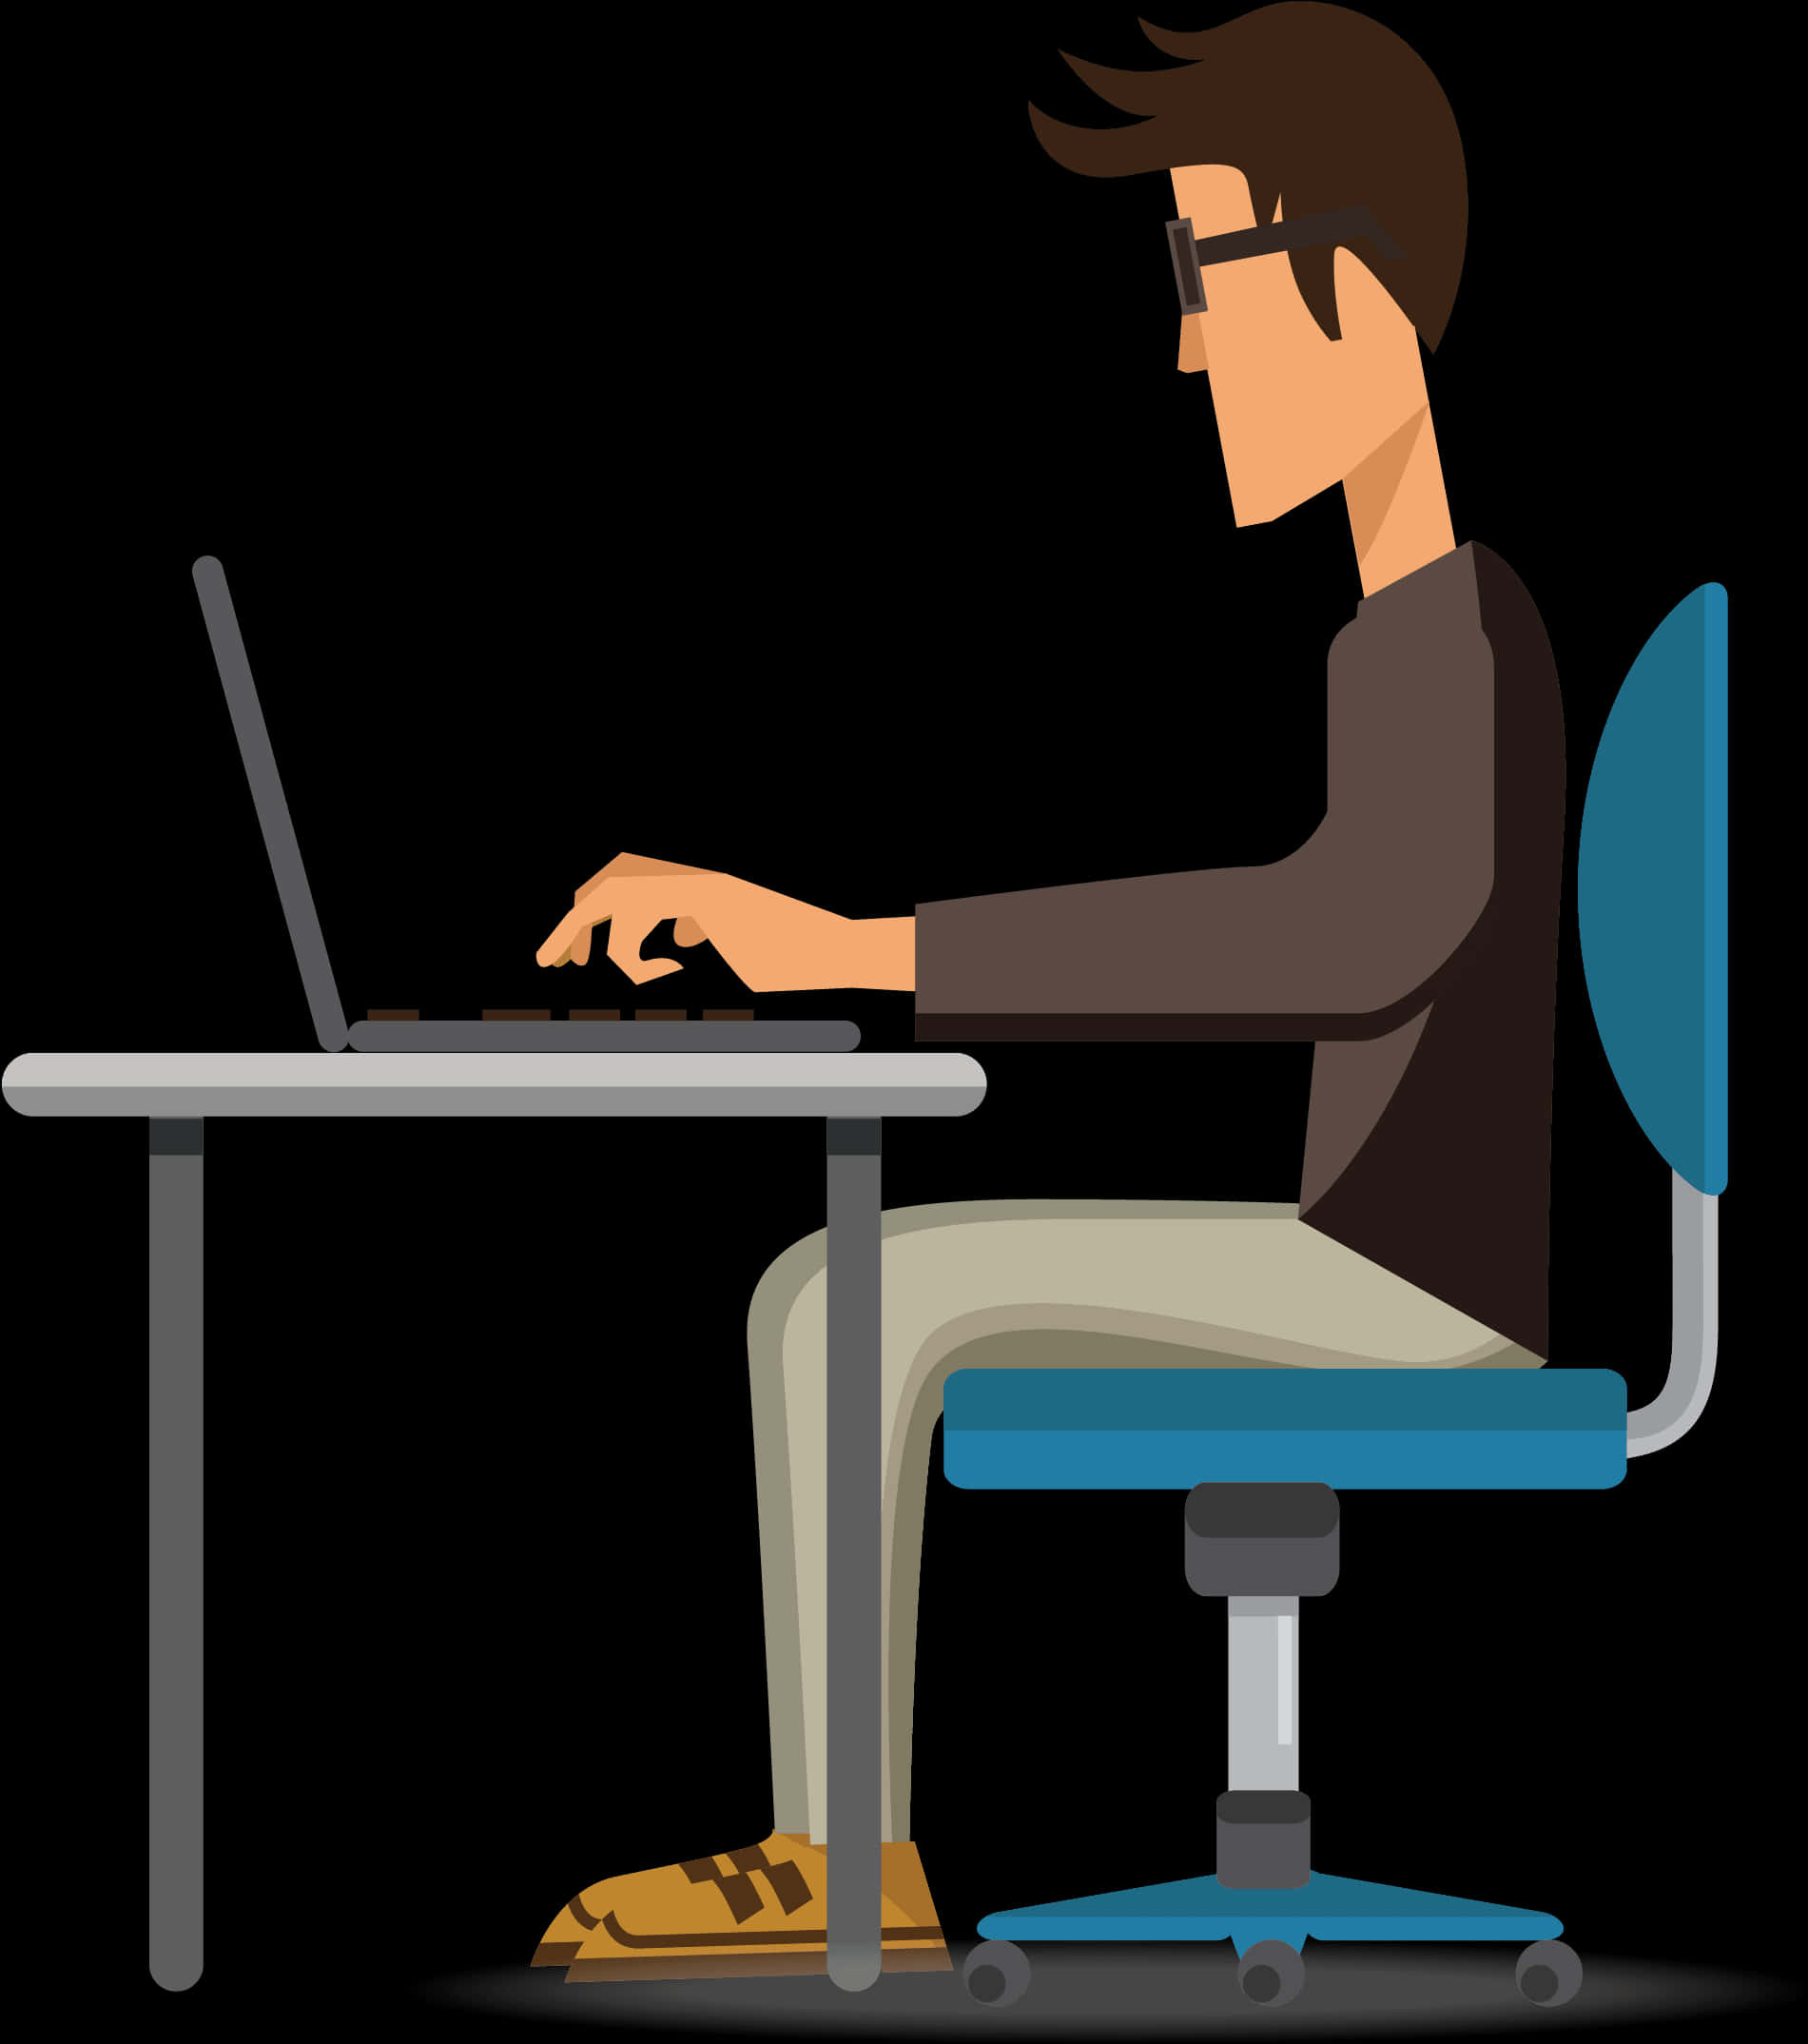 A Cartoon Of A Man Sitting At A Desk Using A Laptop